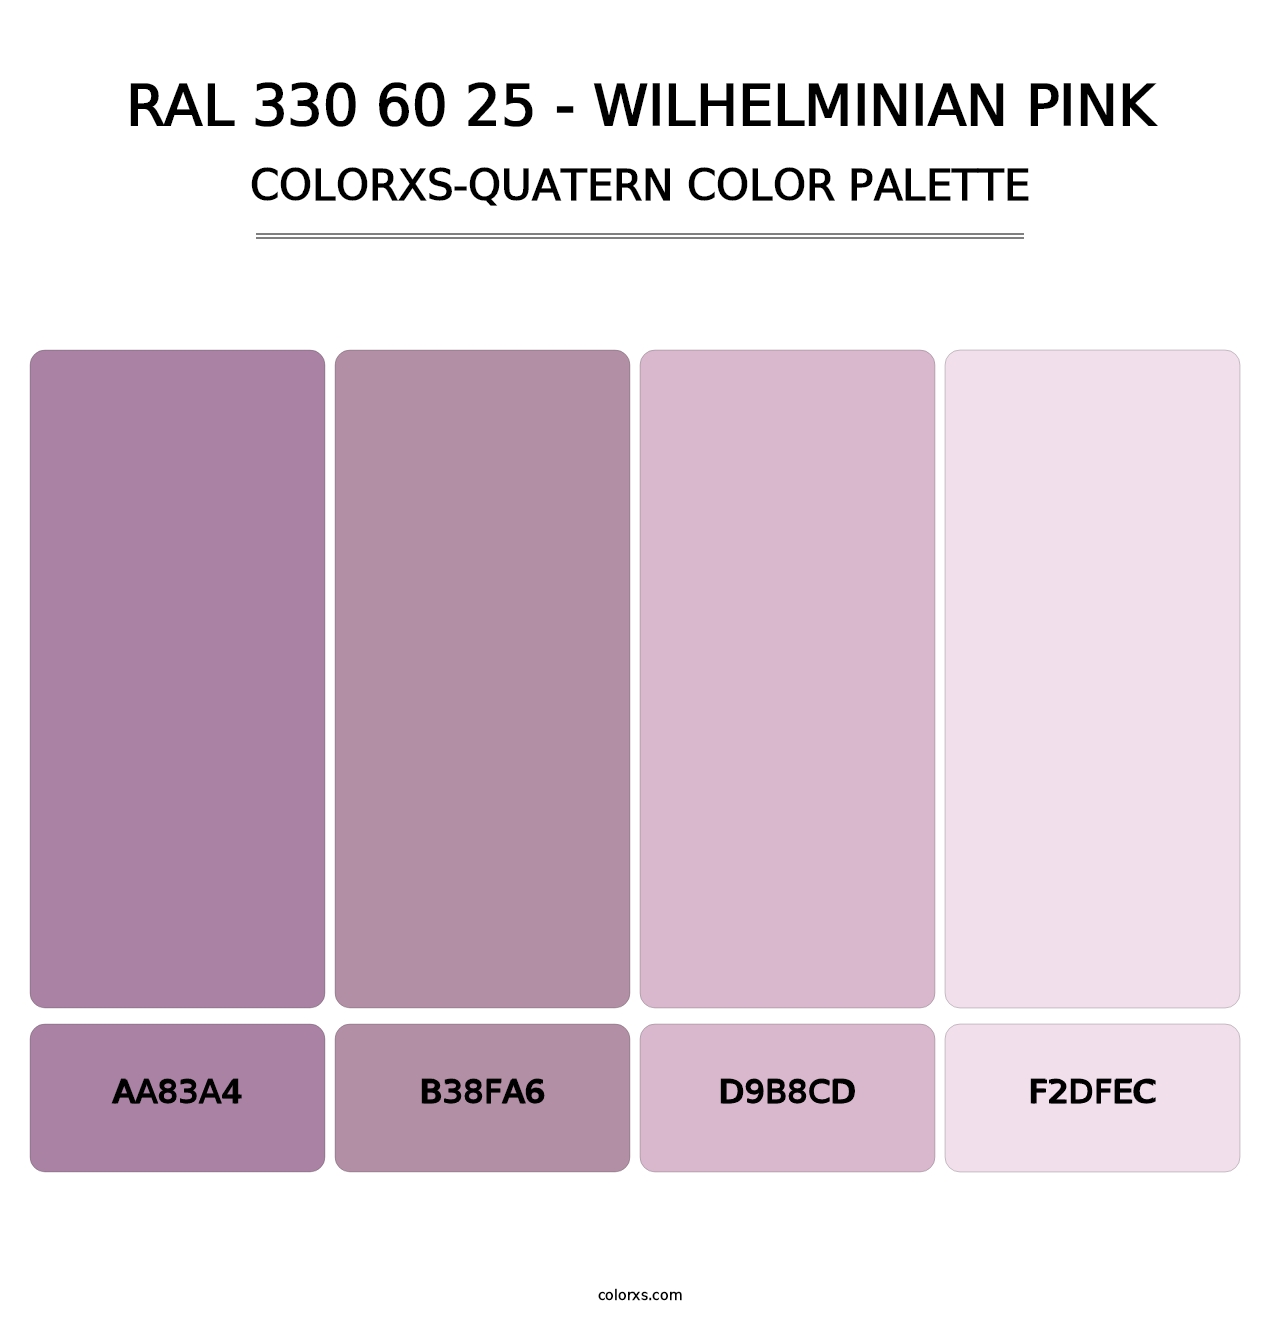 RAL 330 60 25 - Wilhelminian Pink - Colorxs Quatern Palette